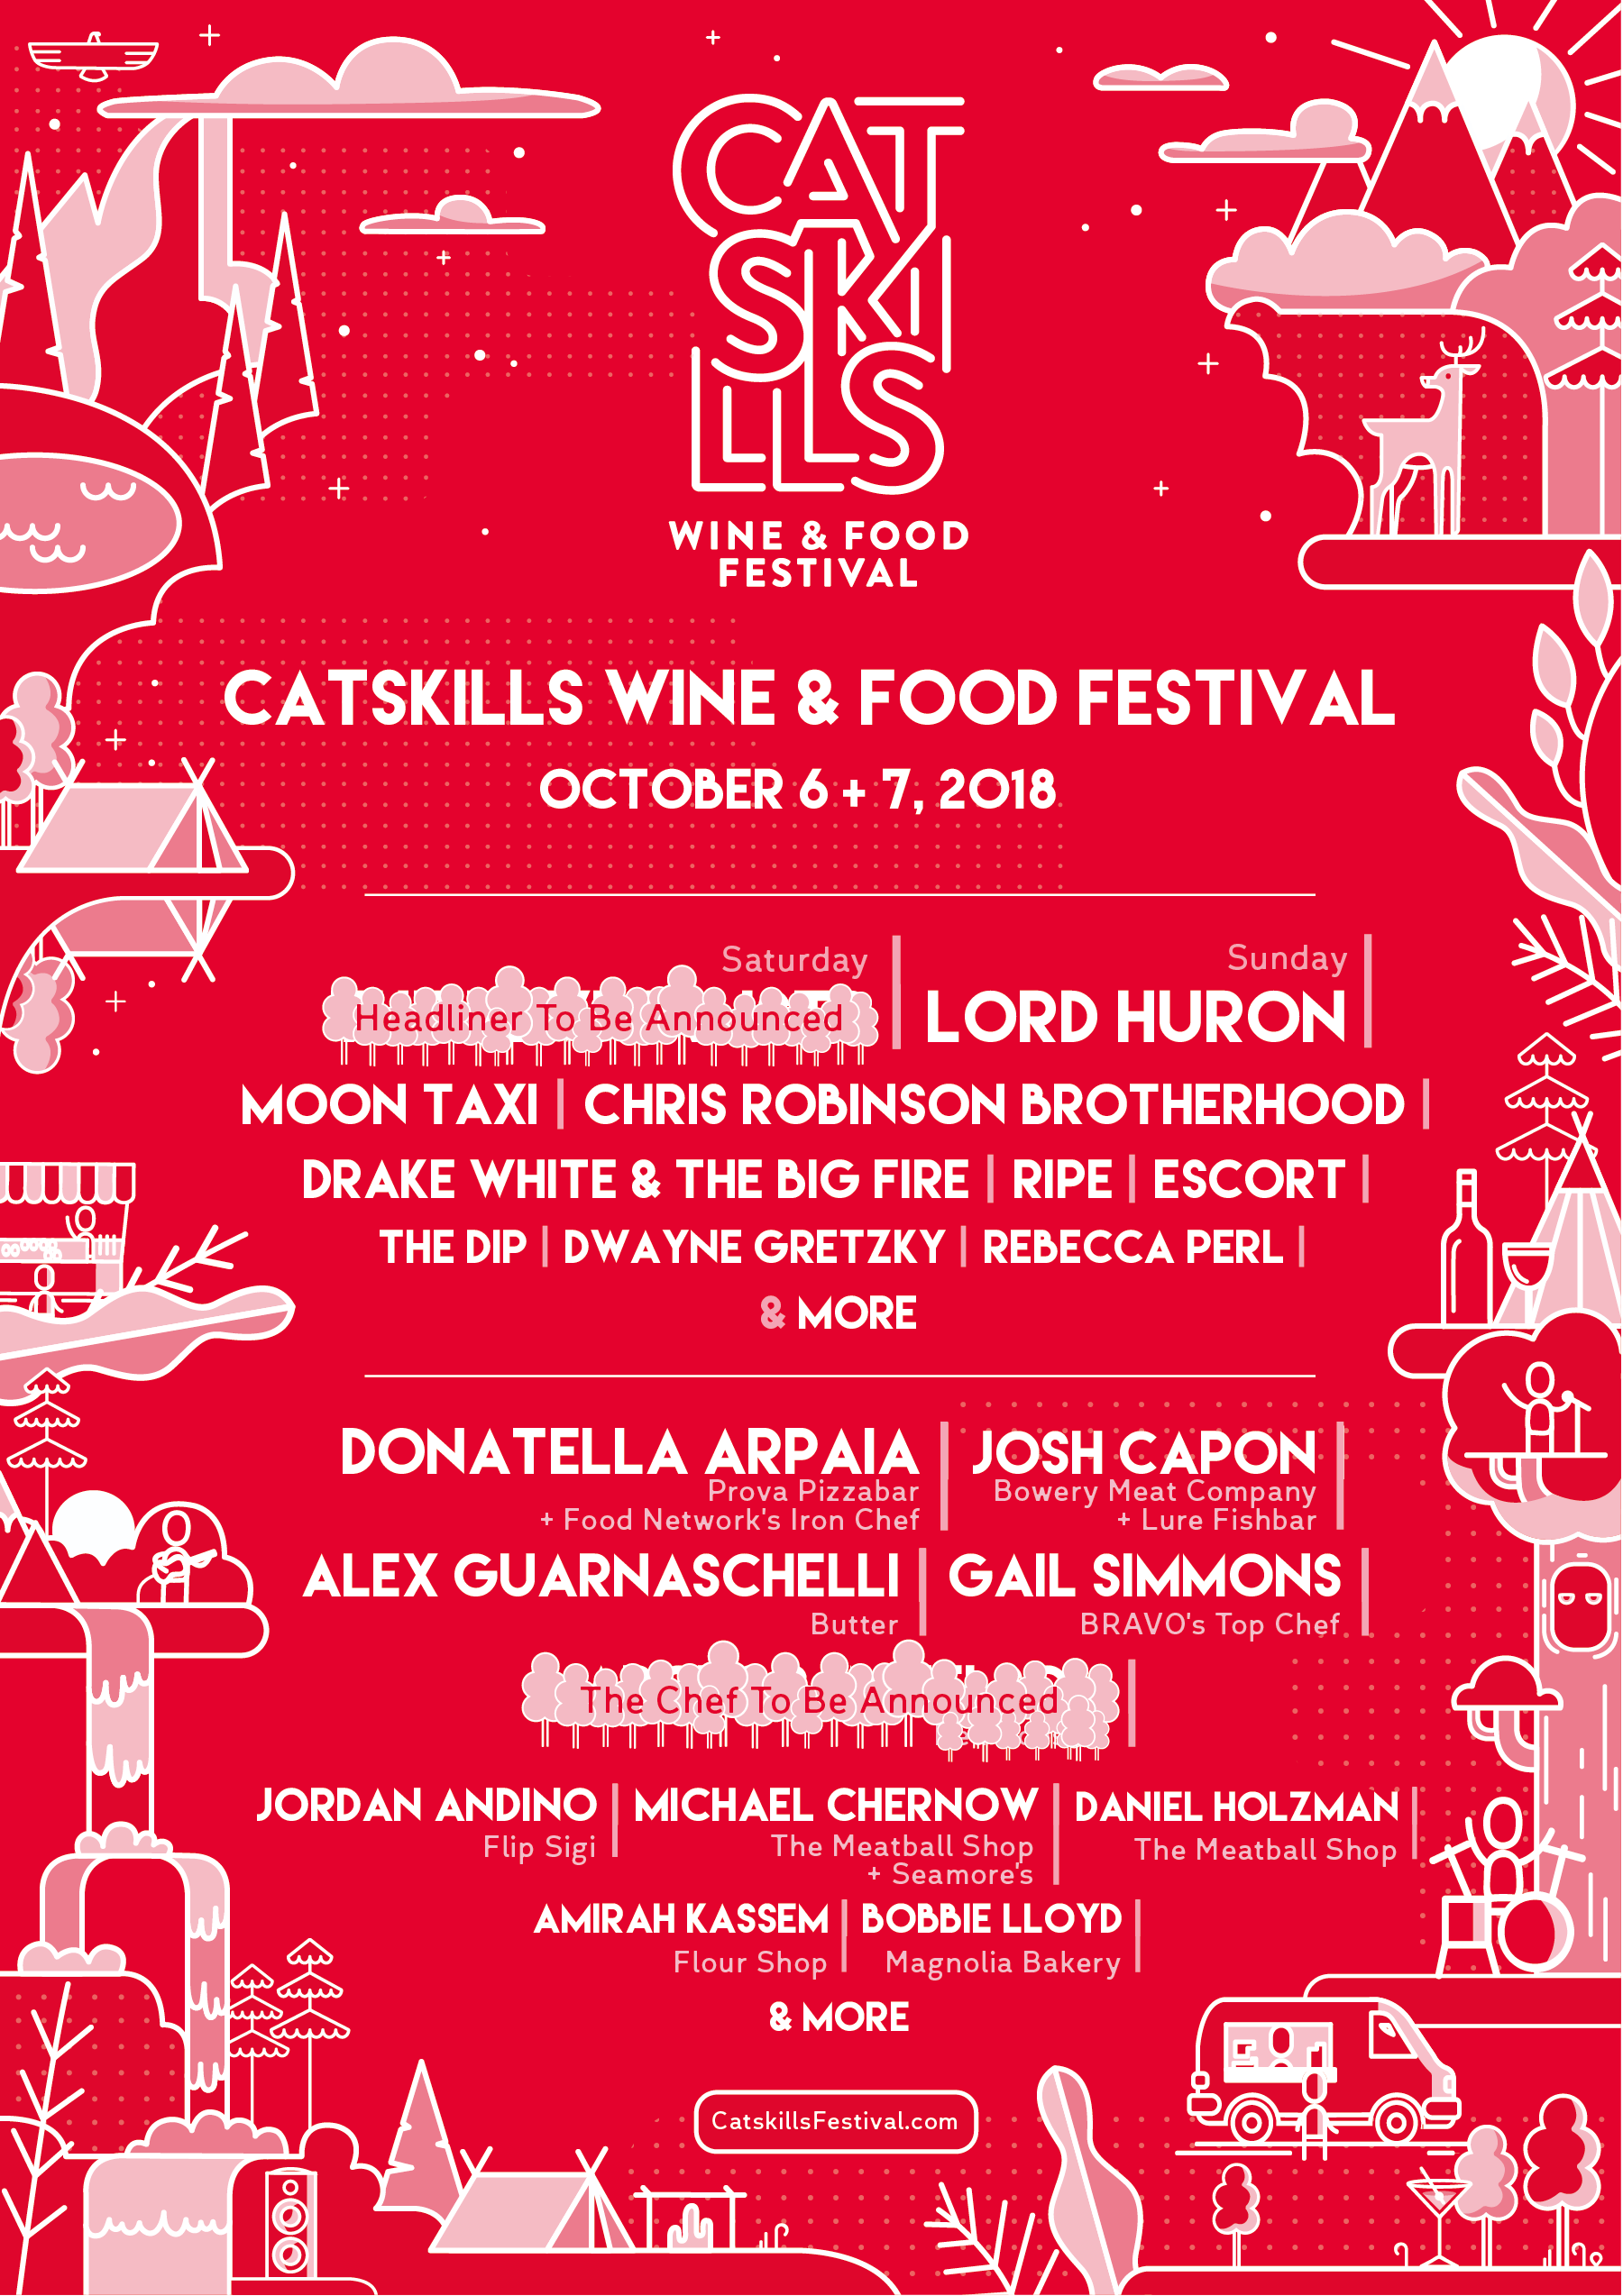 Catskills Wine & Food Festival Announces Unique Lineup of Celebrity